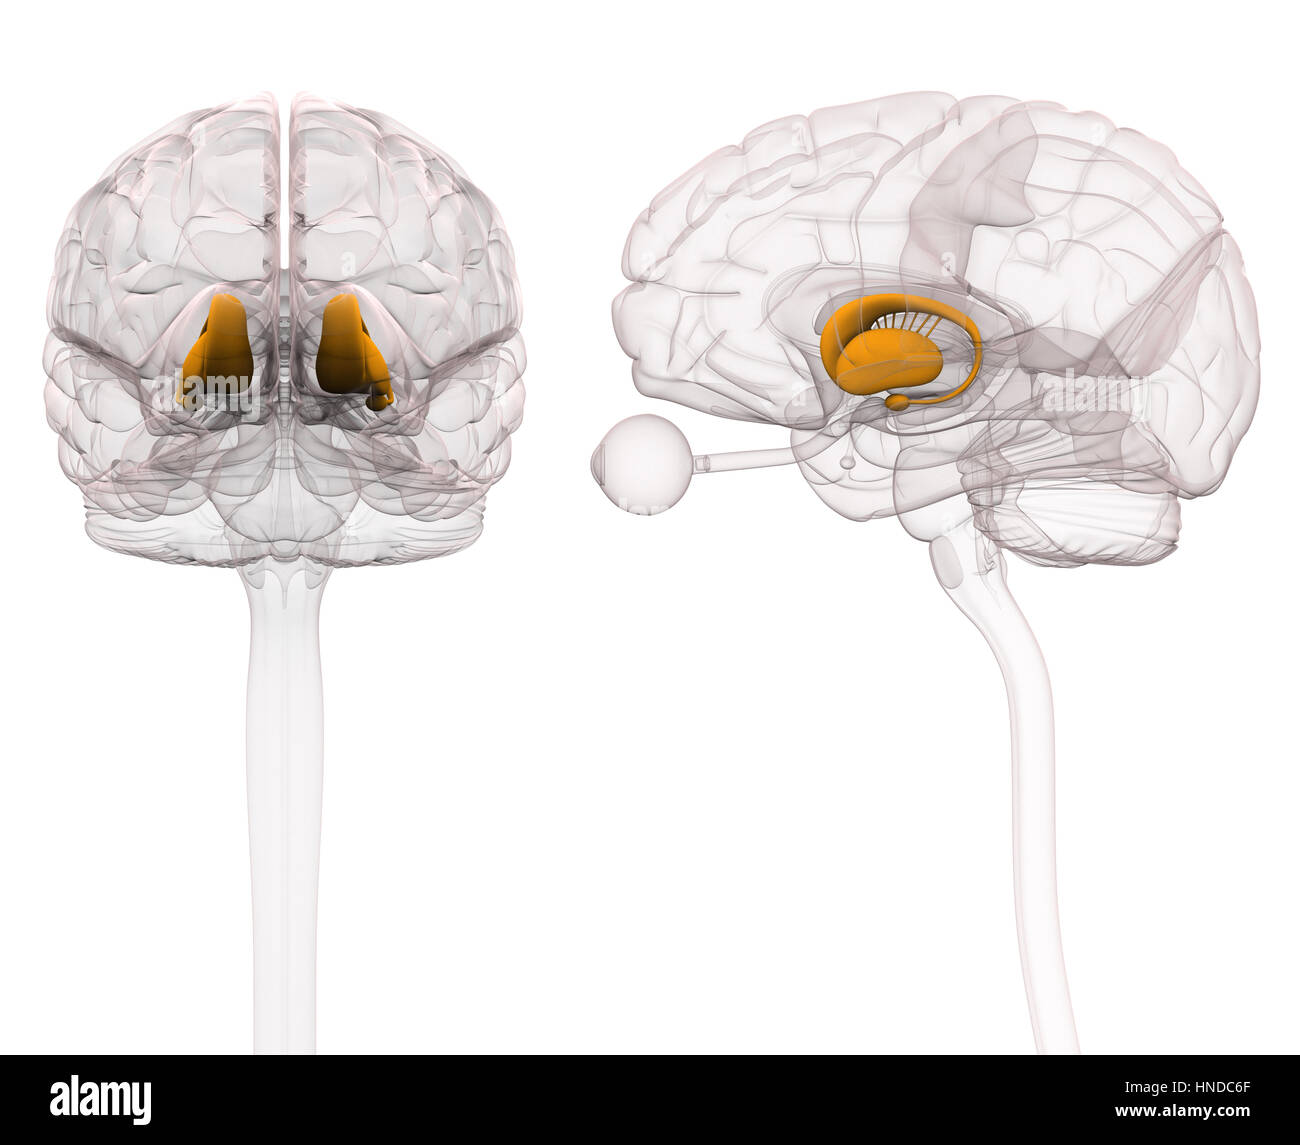 Basal Ganglia - Anatomy Brain - 3d illustration Stock Photo